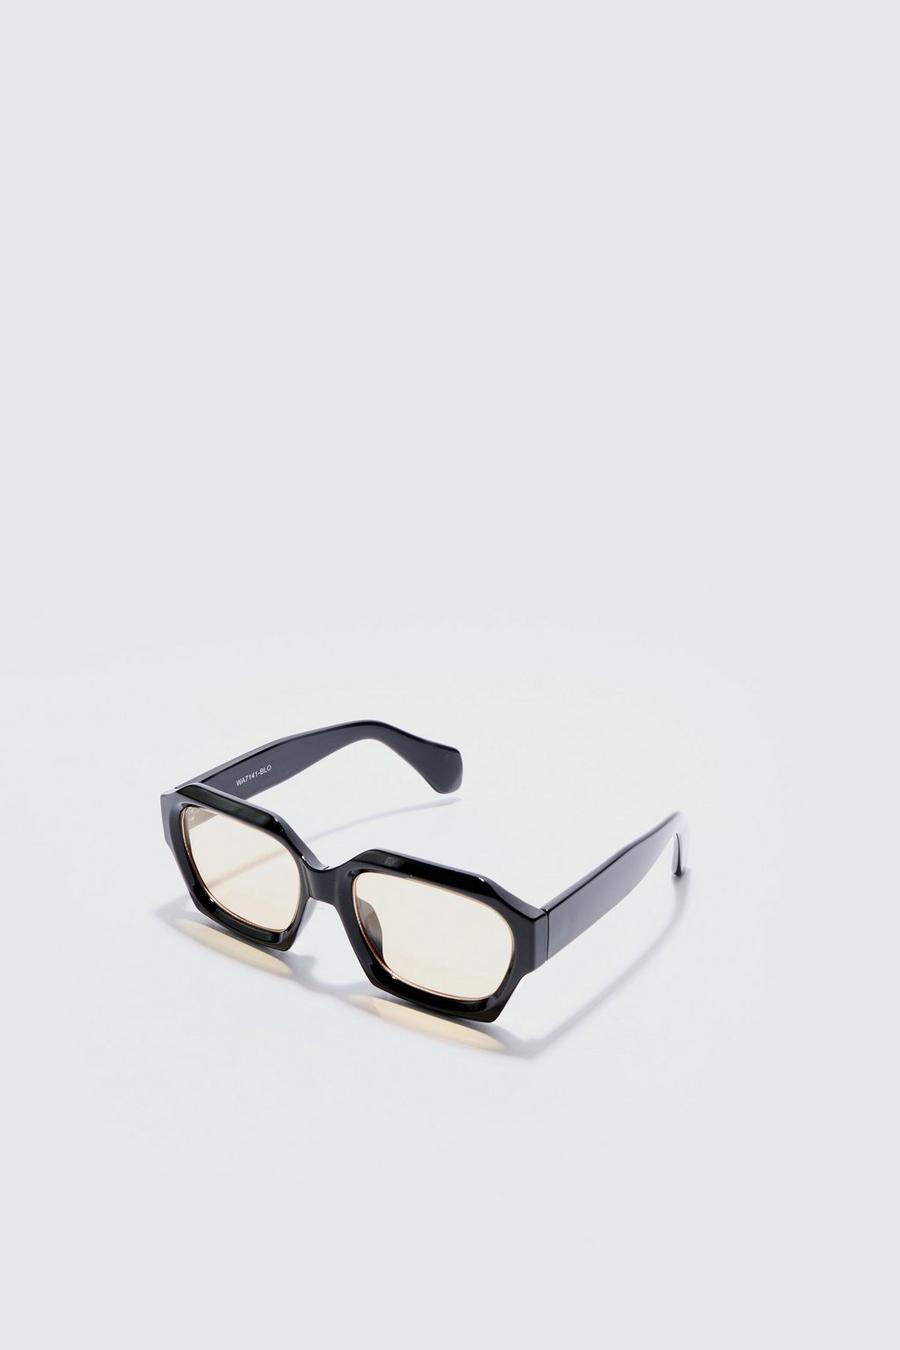 versace medusa acetate cat eye sunglasses